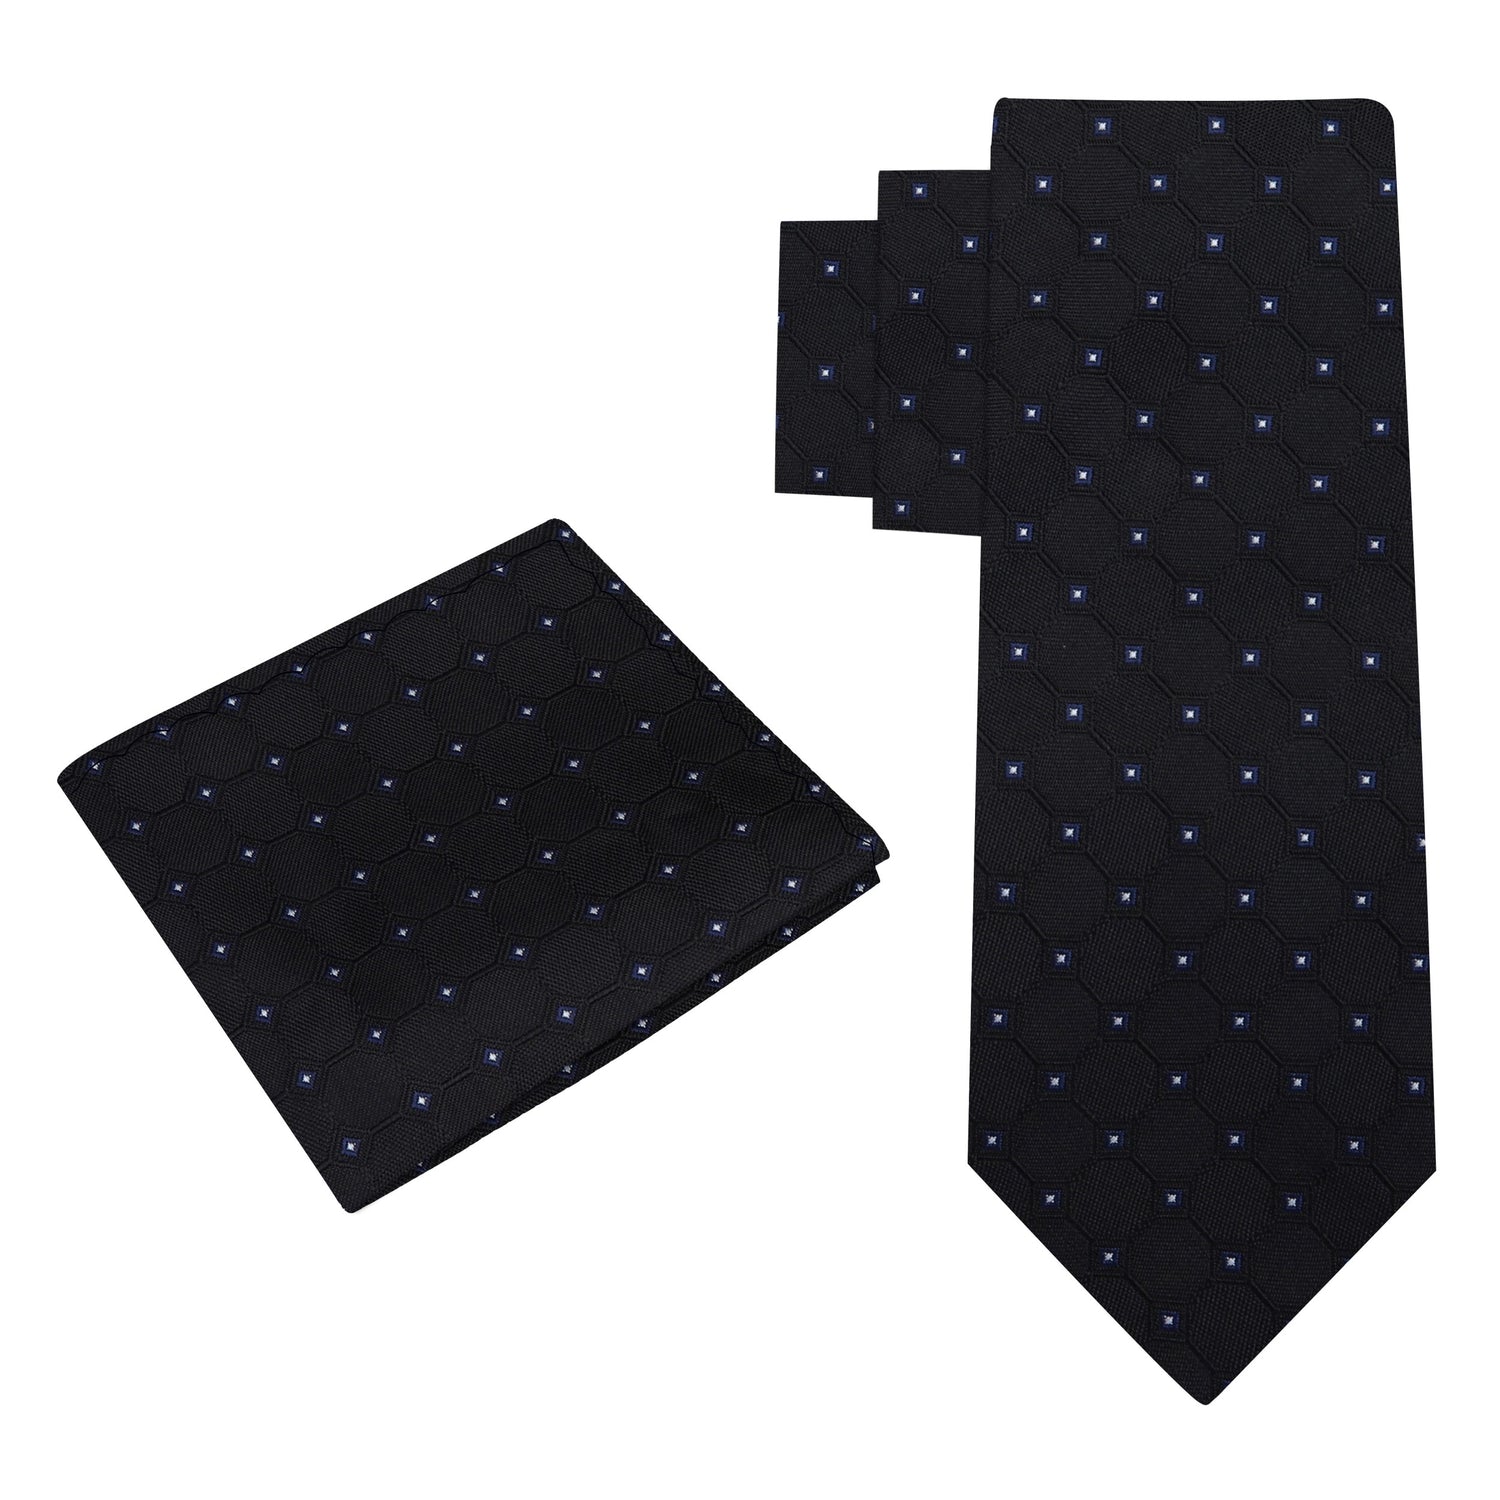 Alt view: A Black, White Geometric Texture With Small Black, White Checks Silk Necktie, Pocket Square